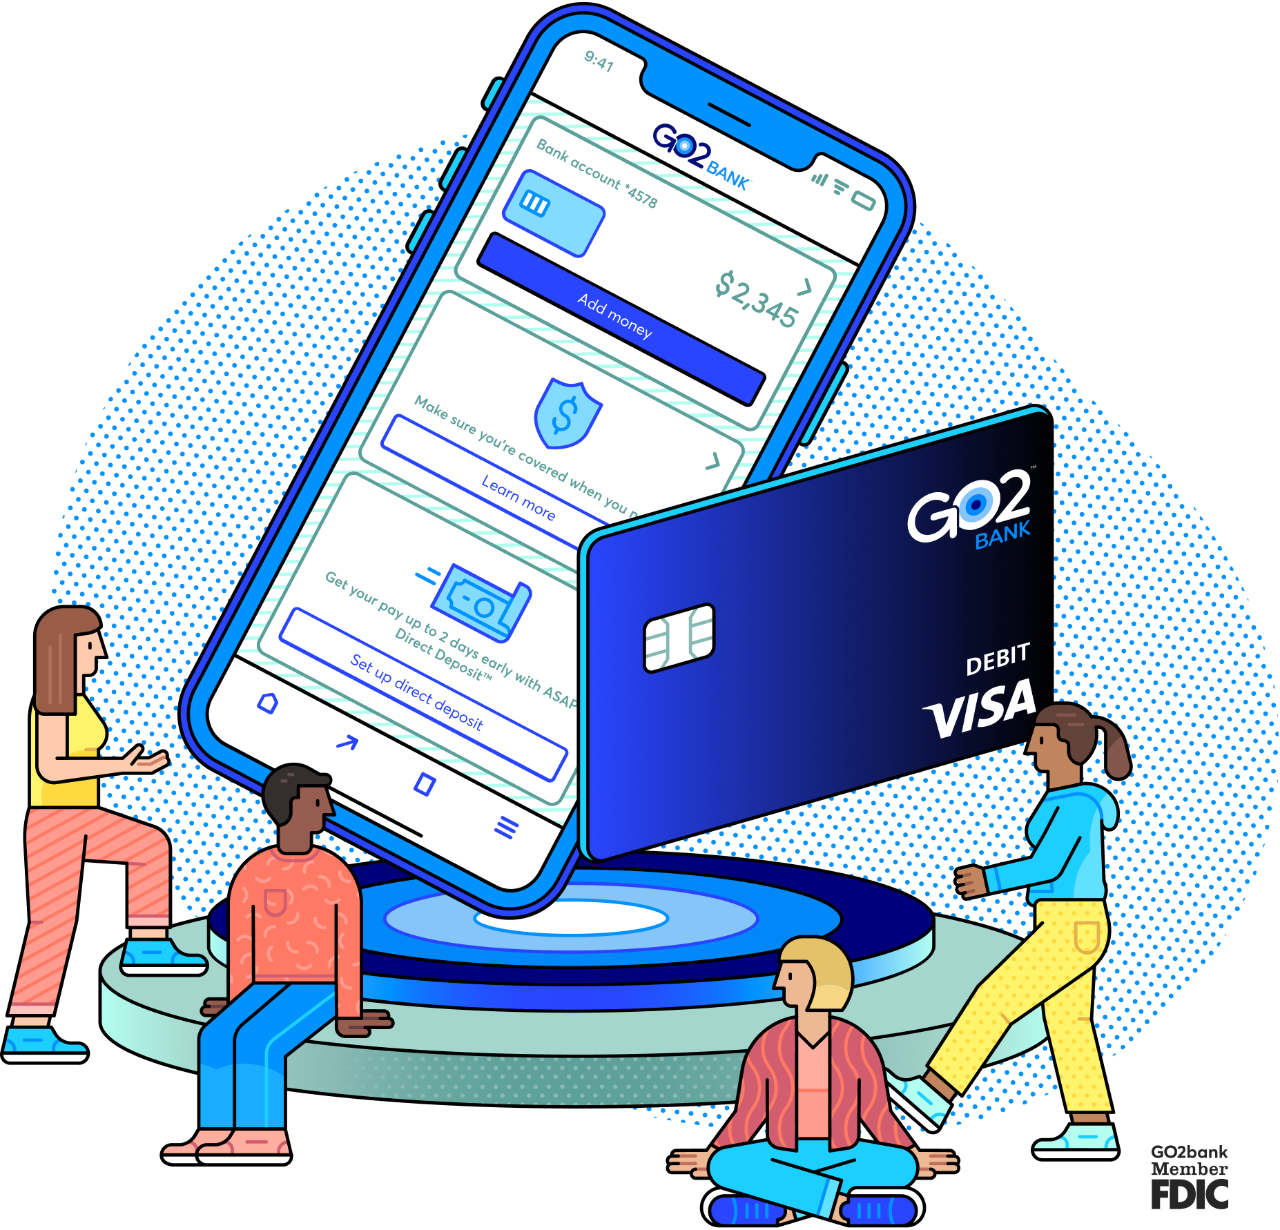 Go2bank-mobile-bank-account